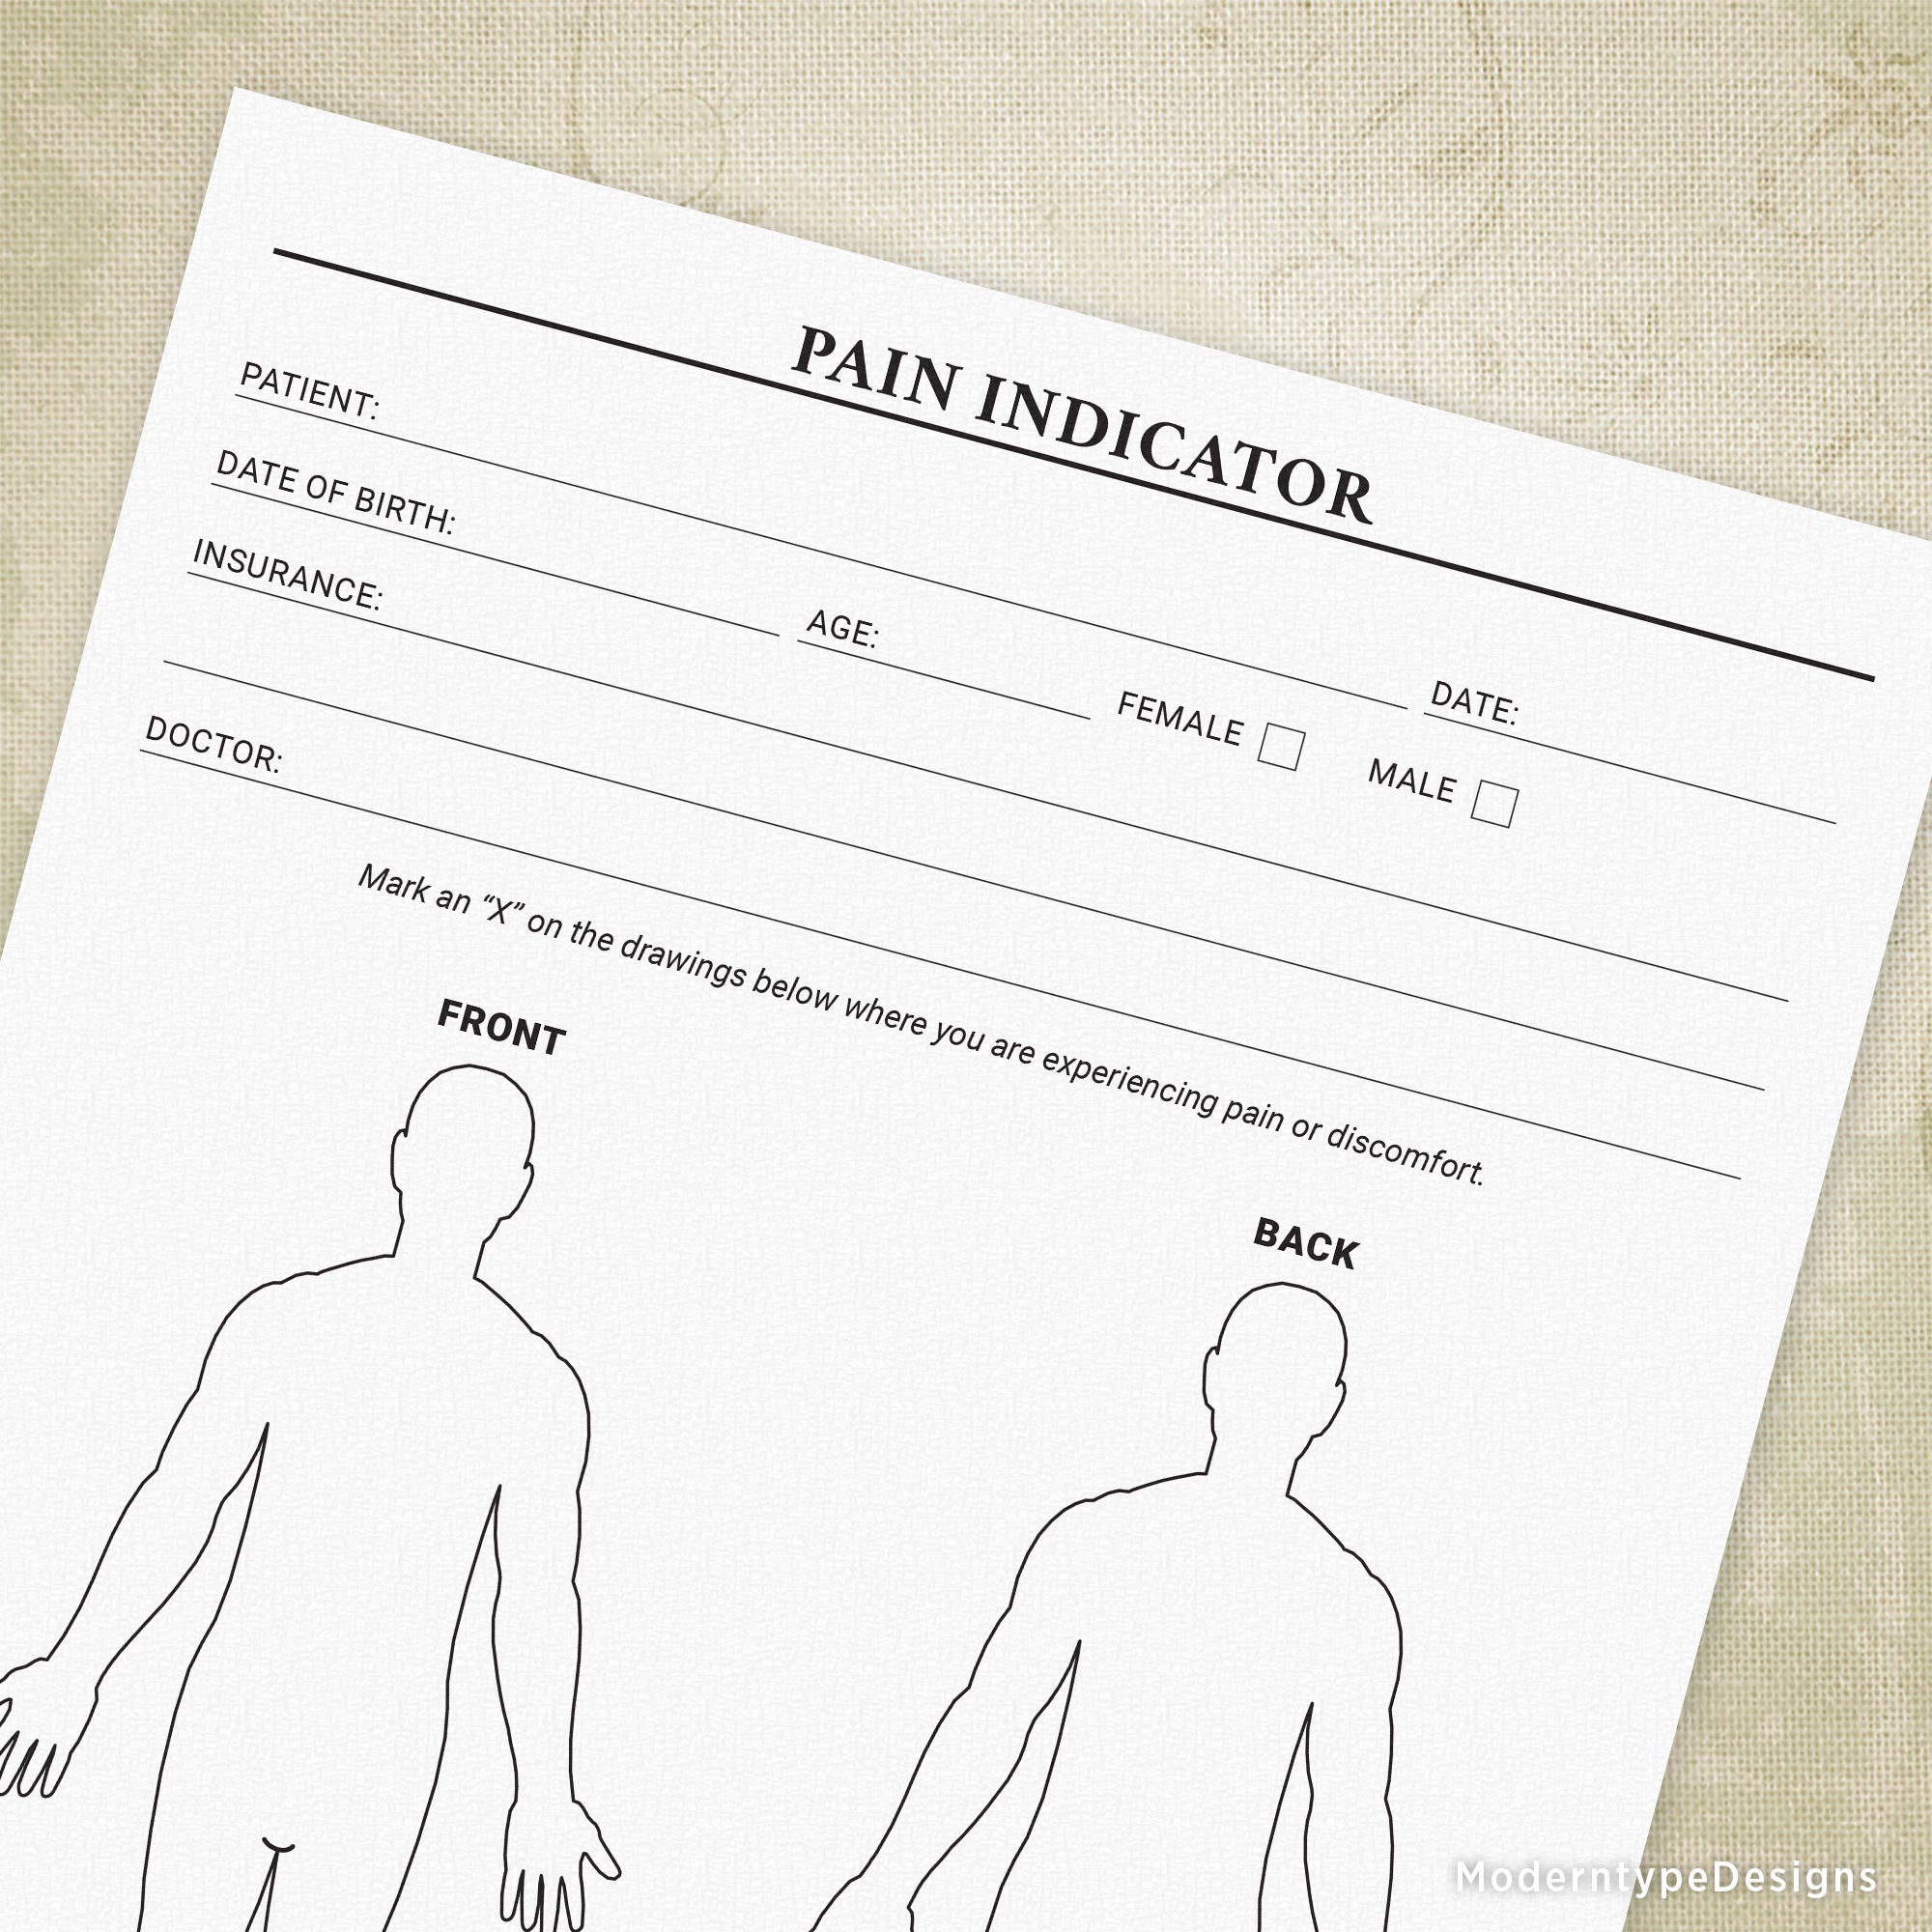 Pain Indicator Form Printable